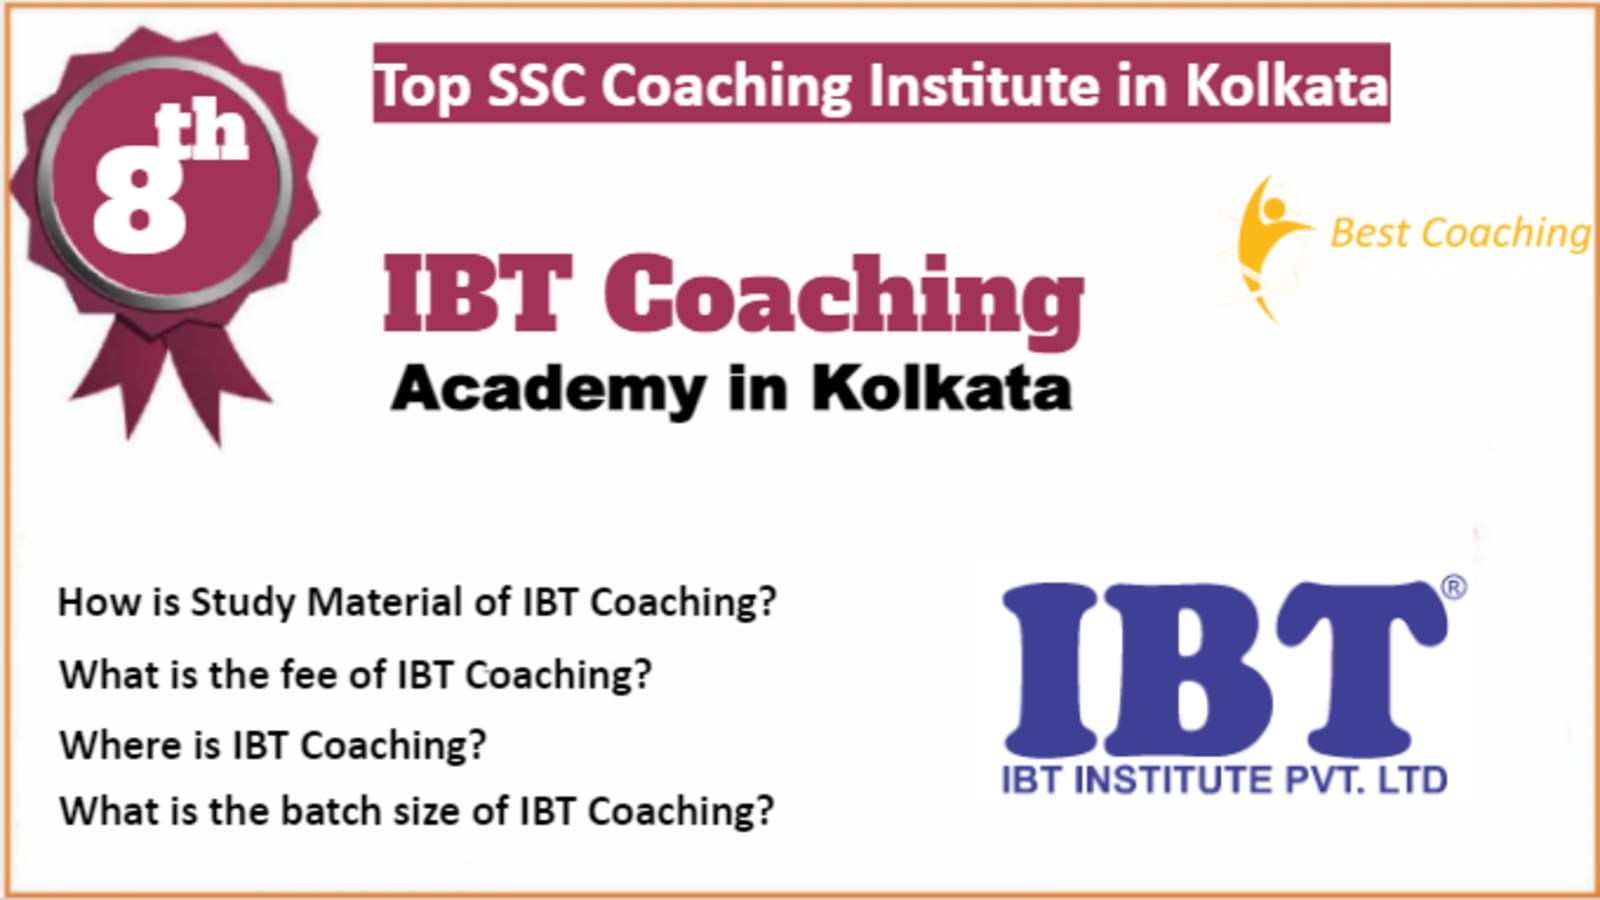 Rank 8 Best SSC Coaching in Kolkata